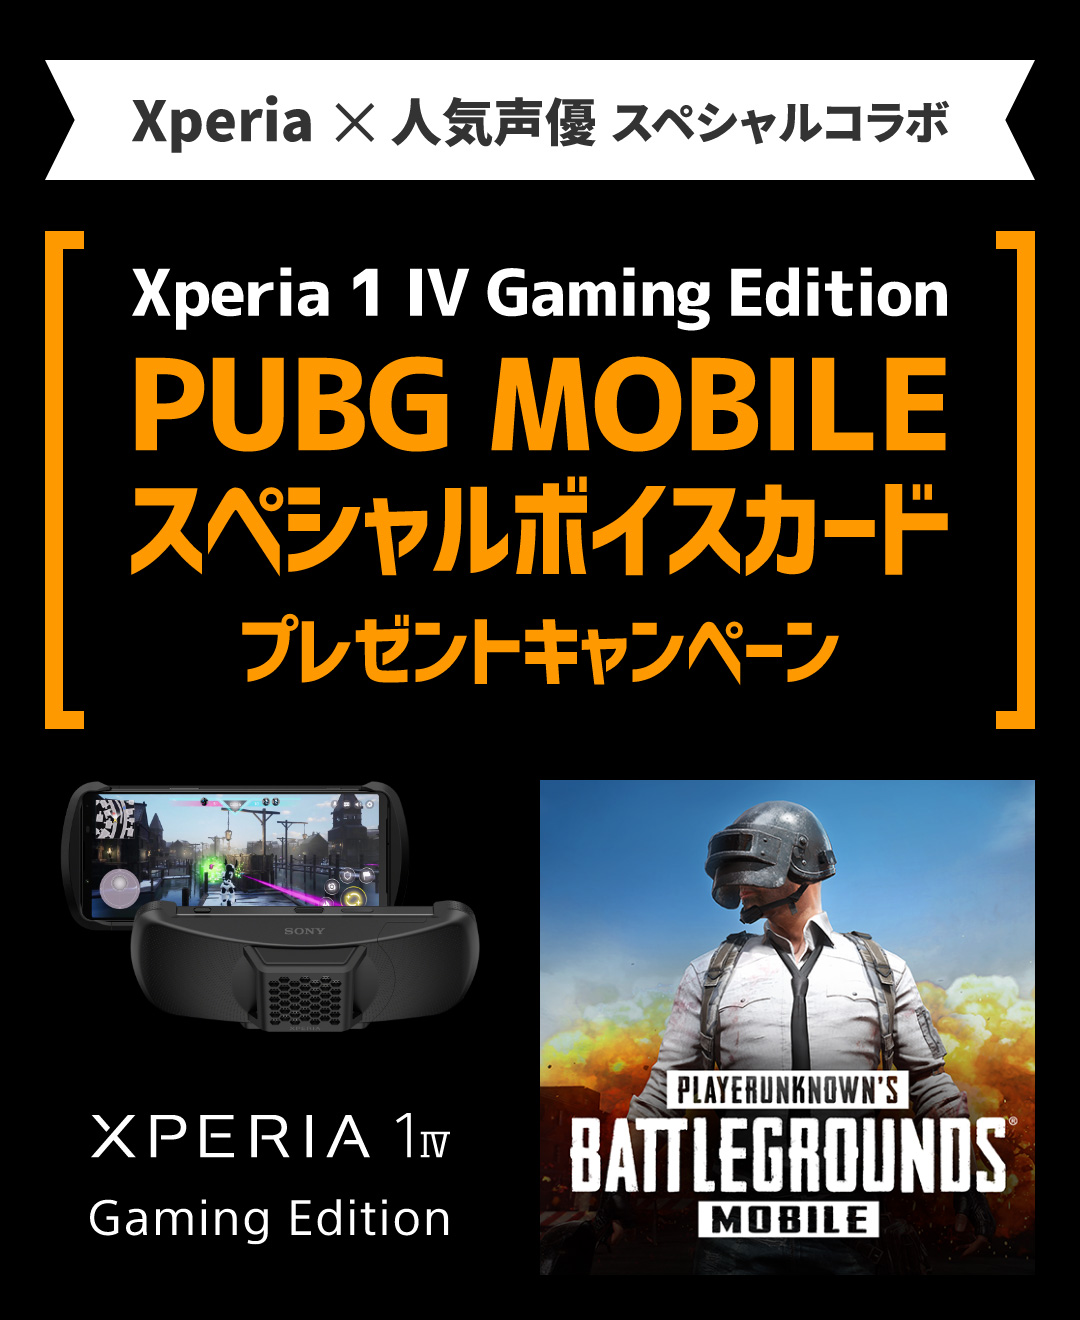 Xperia x 人気声優 スペシャルコラボ Xperia 1 IV Gaming Edition PUBG MOBILEスペシャルボイスカードプレゼントキャンペーン